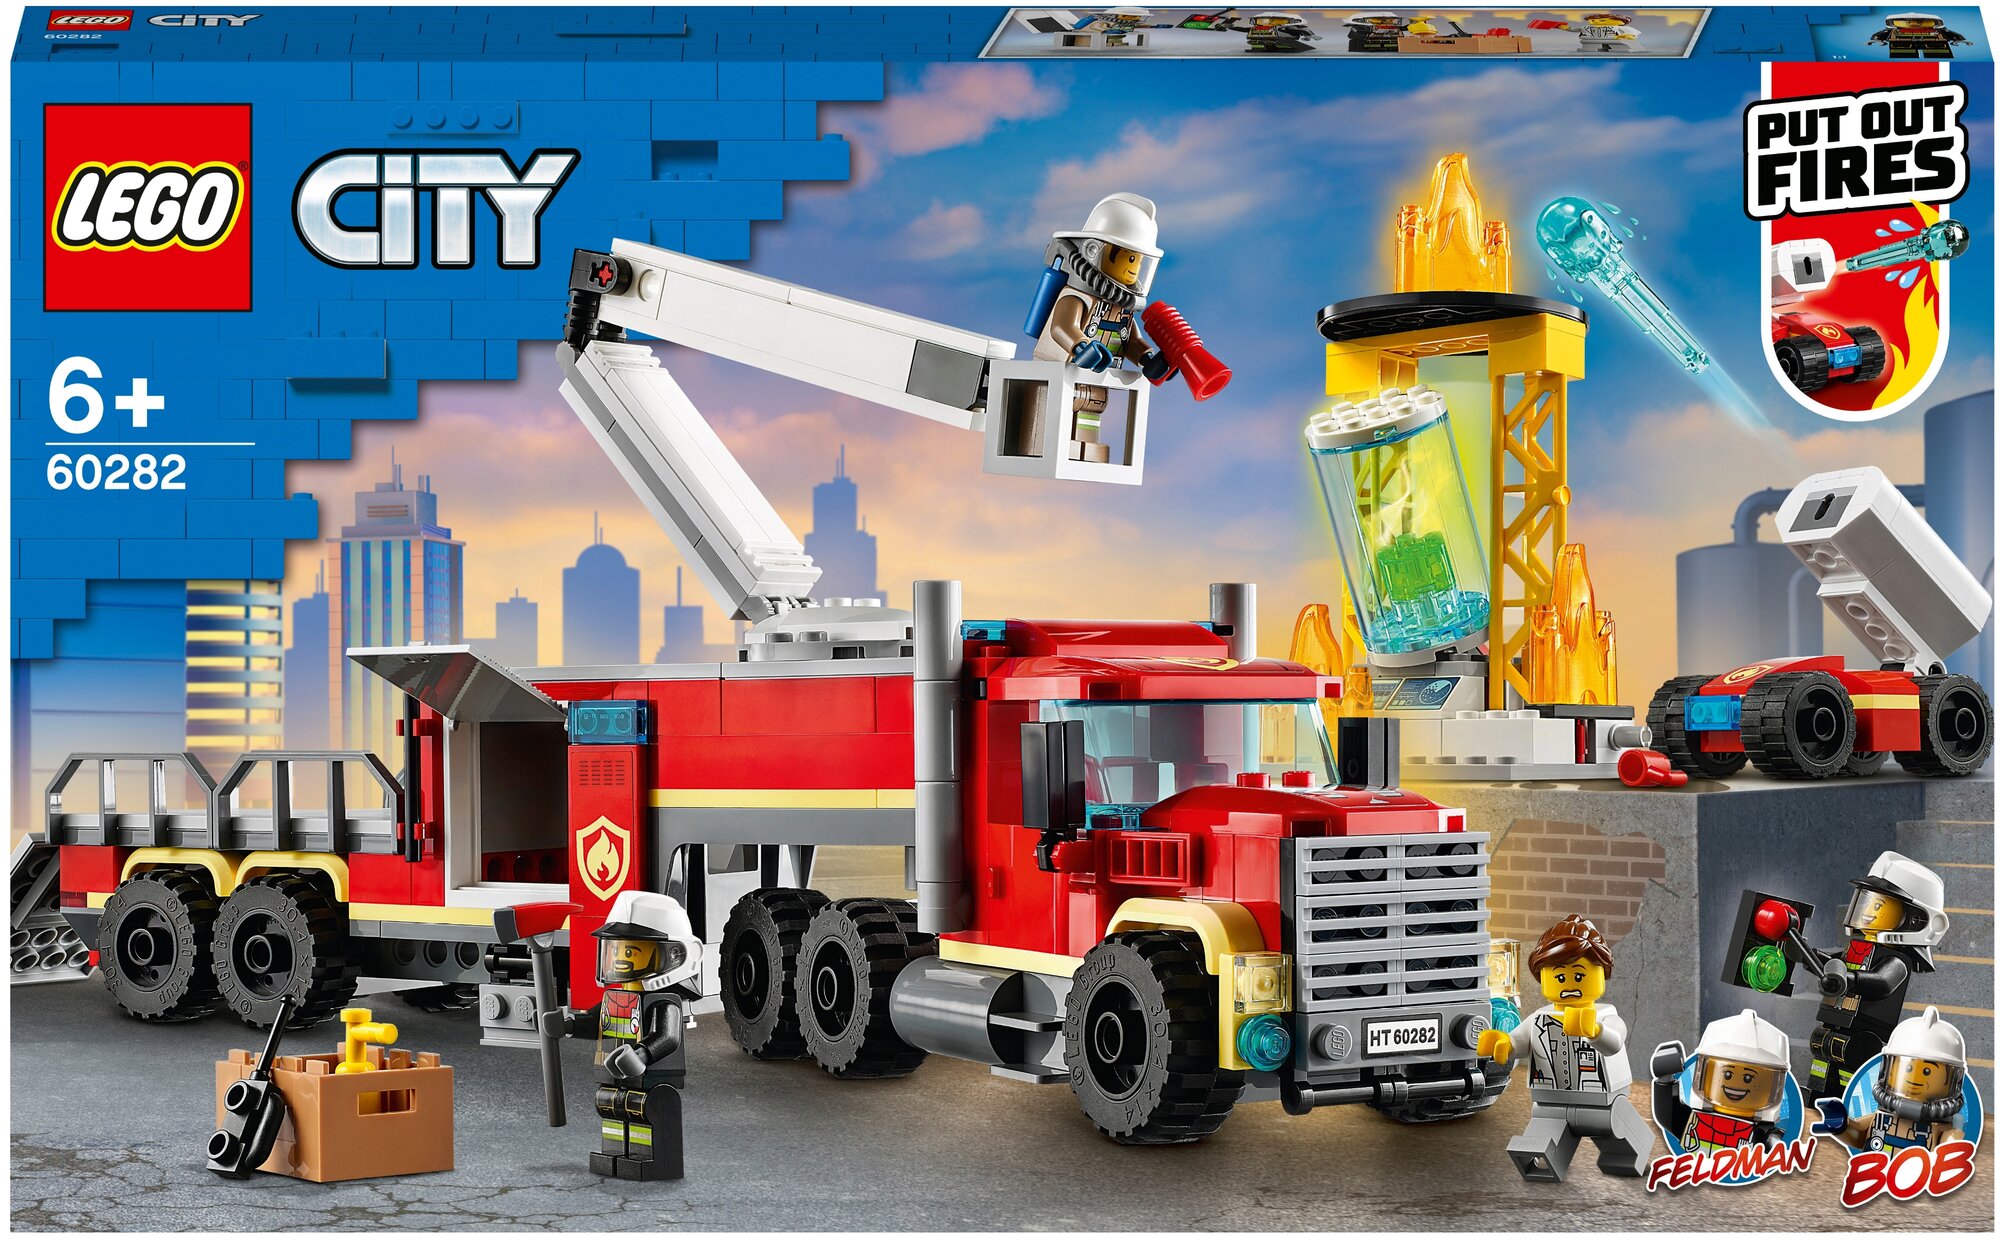  LEGO City Fire 60282  